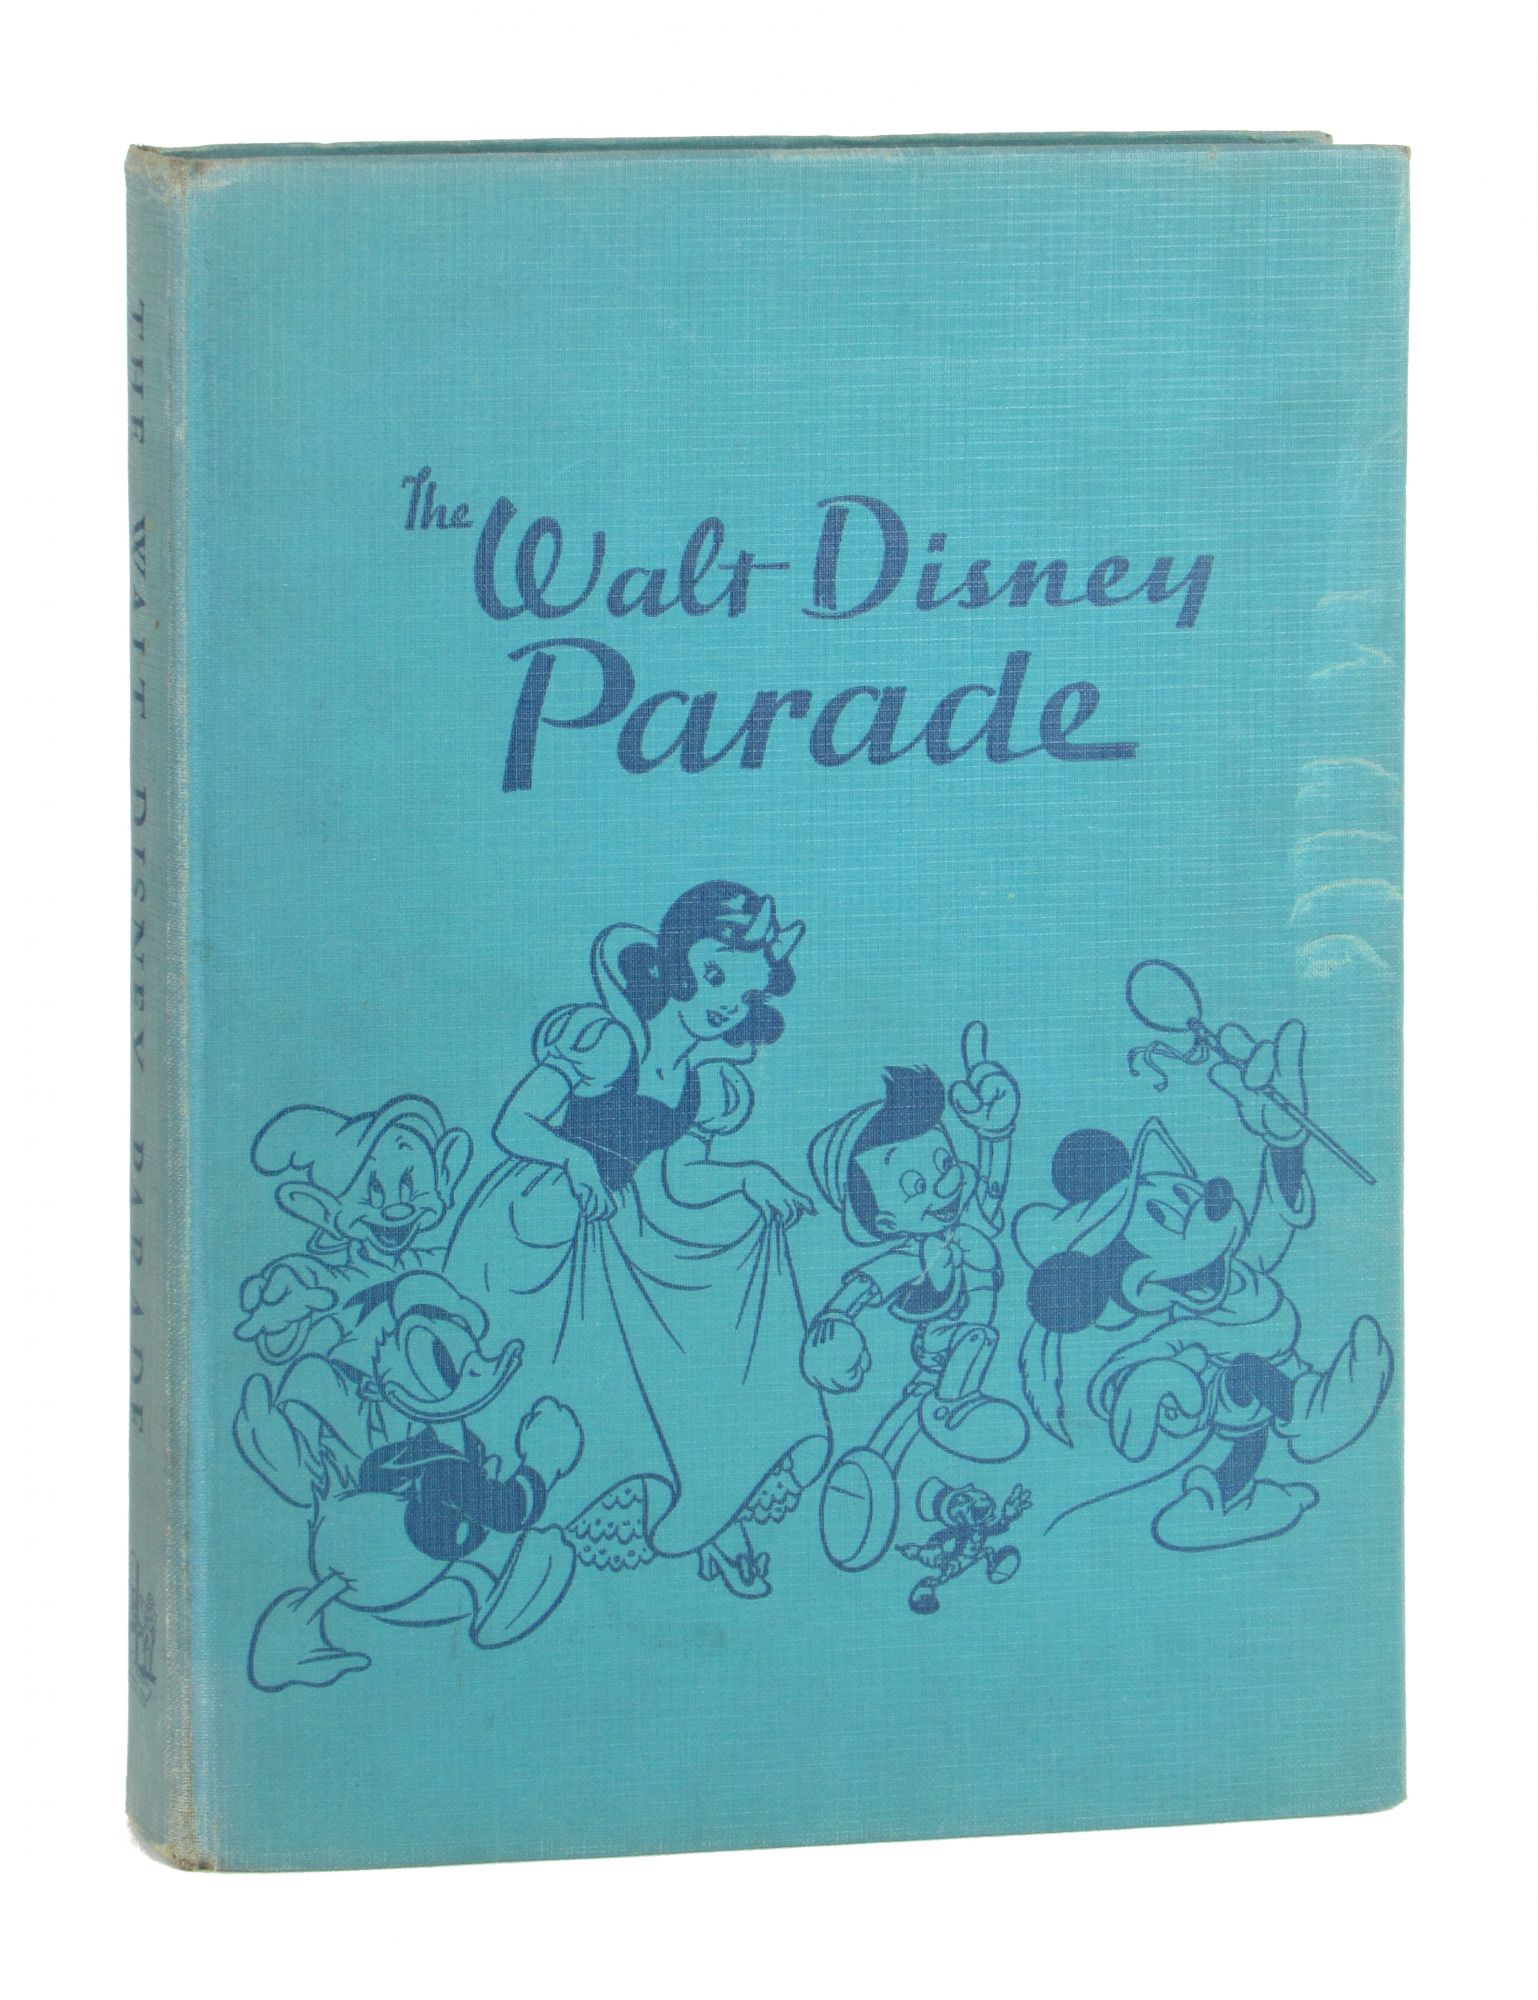 The Walt Disney Parade Illustrated by the Walt Disney Studio par Walt